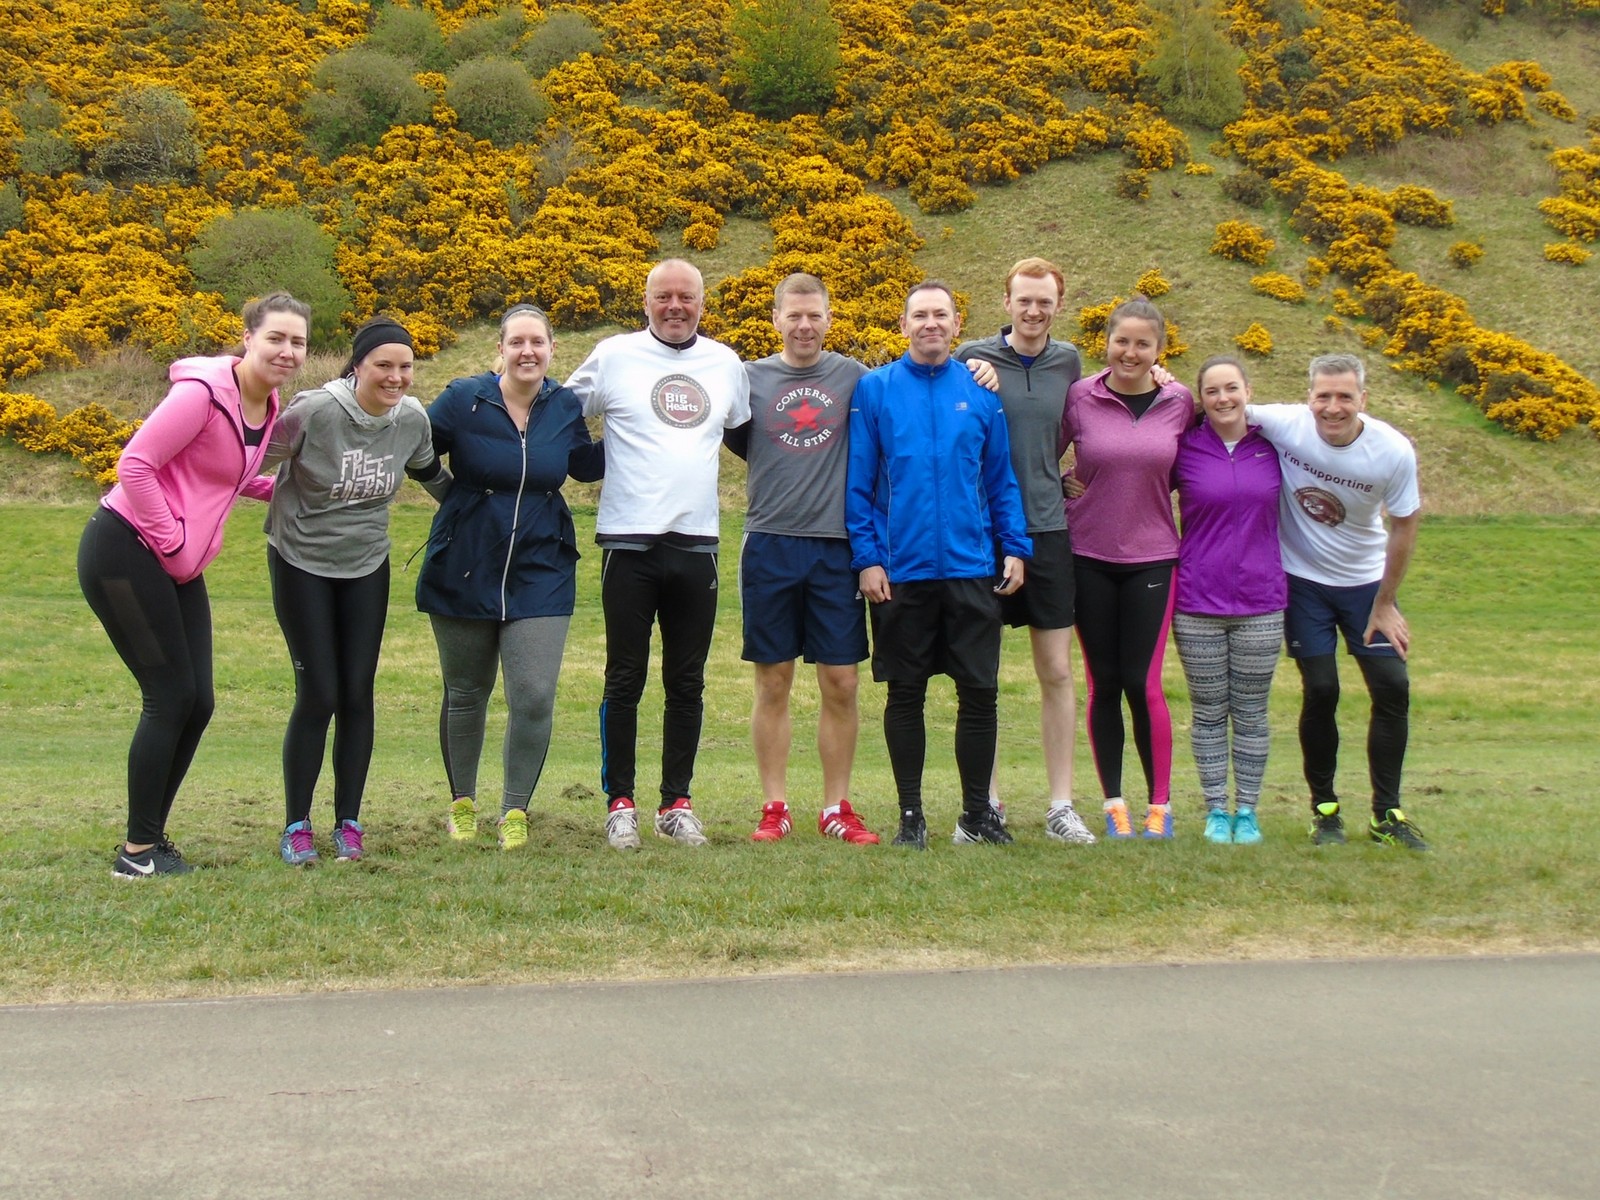  » Good luck to the team running at the Edinburgh Marathon Festival!